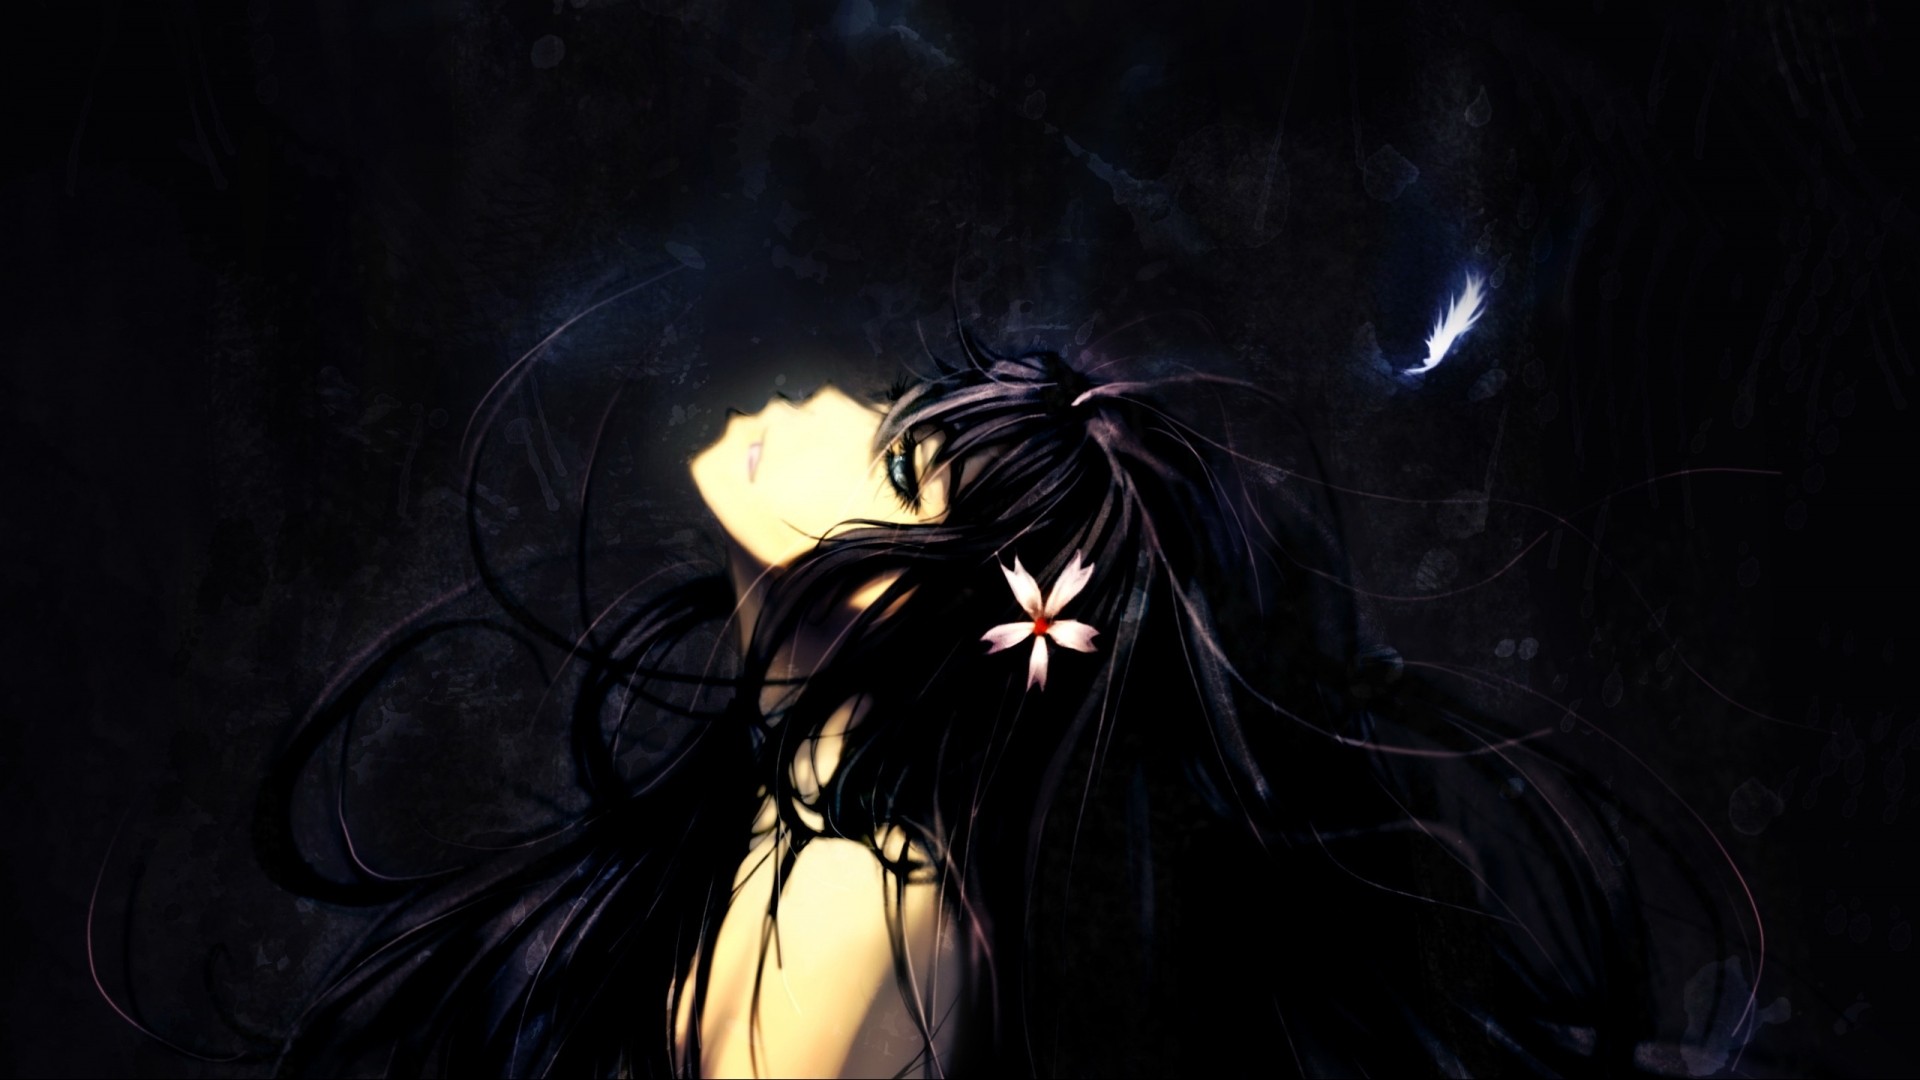 Anime 1920x1080 anime dark anime girls black hair dark hair long hair flower in hair face fantasy girl